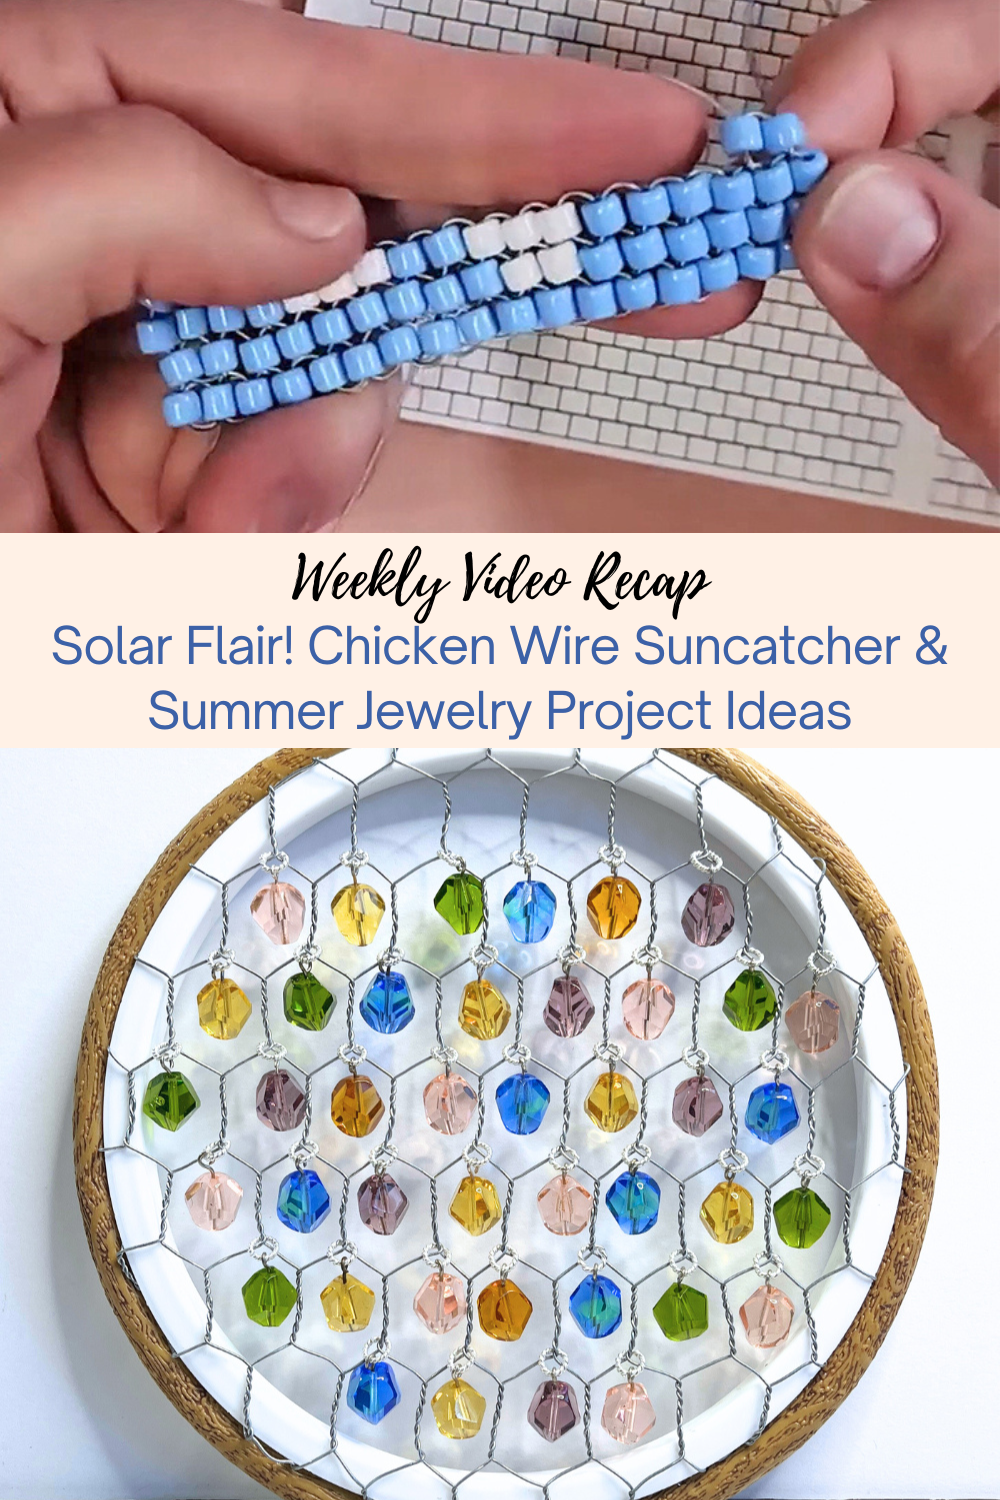 Solar Flair! Chicken Wire Suncatcher & Summer Jewelry Project Ideas Collage